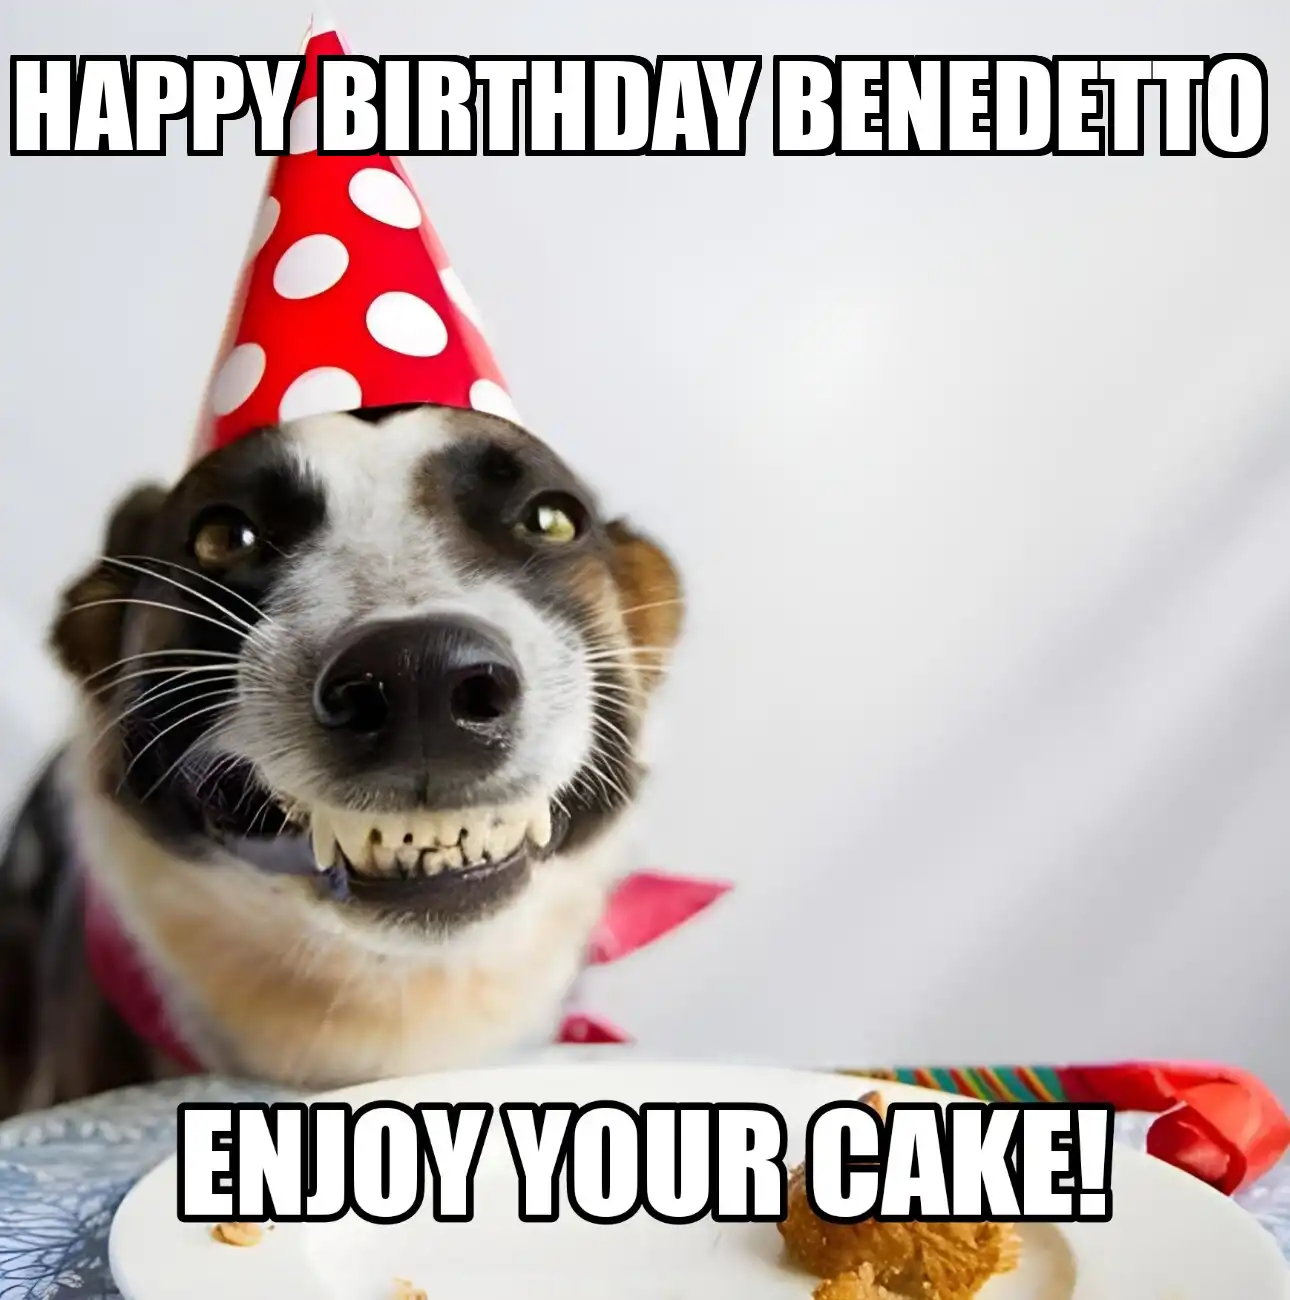 Happy Birthday Benedetto Enjoy Your Cake Dog Meme